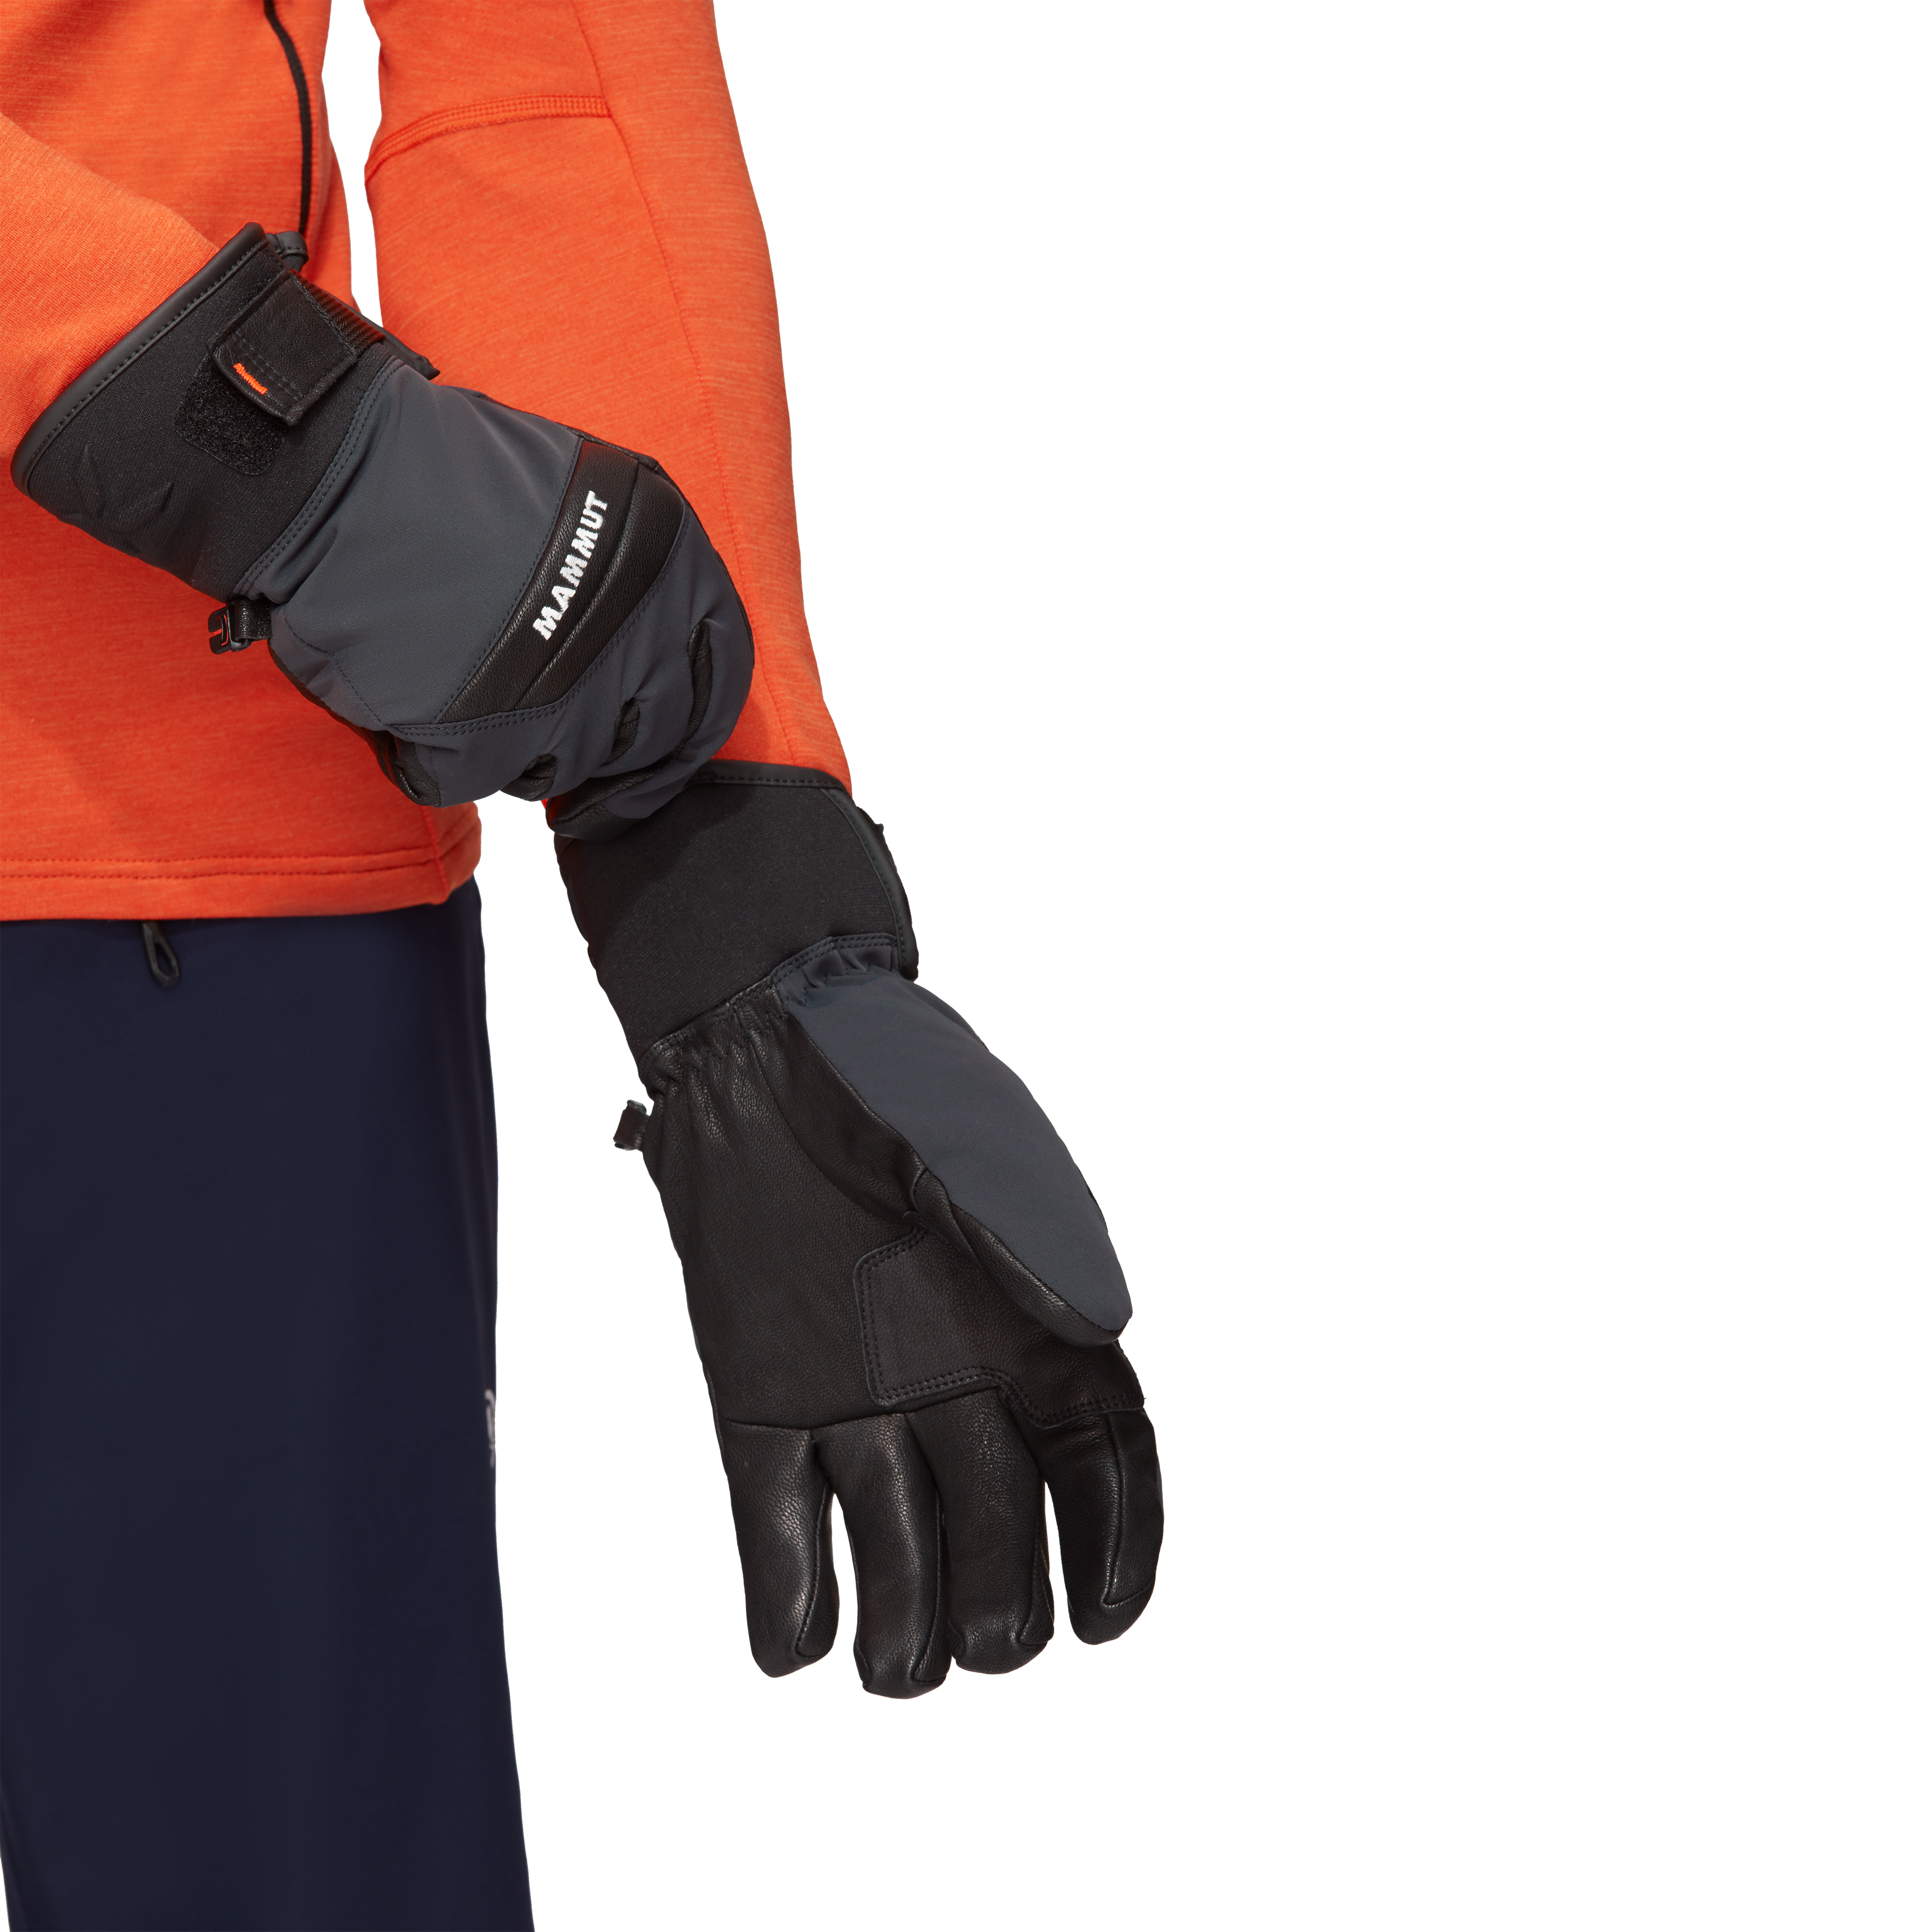 Nordwand Pro Glove product image